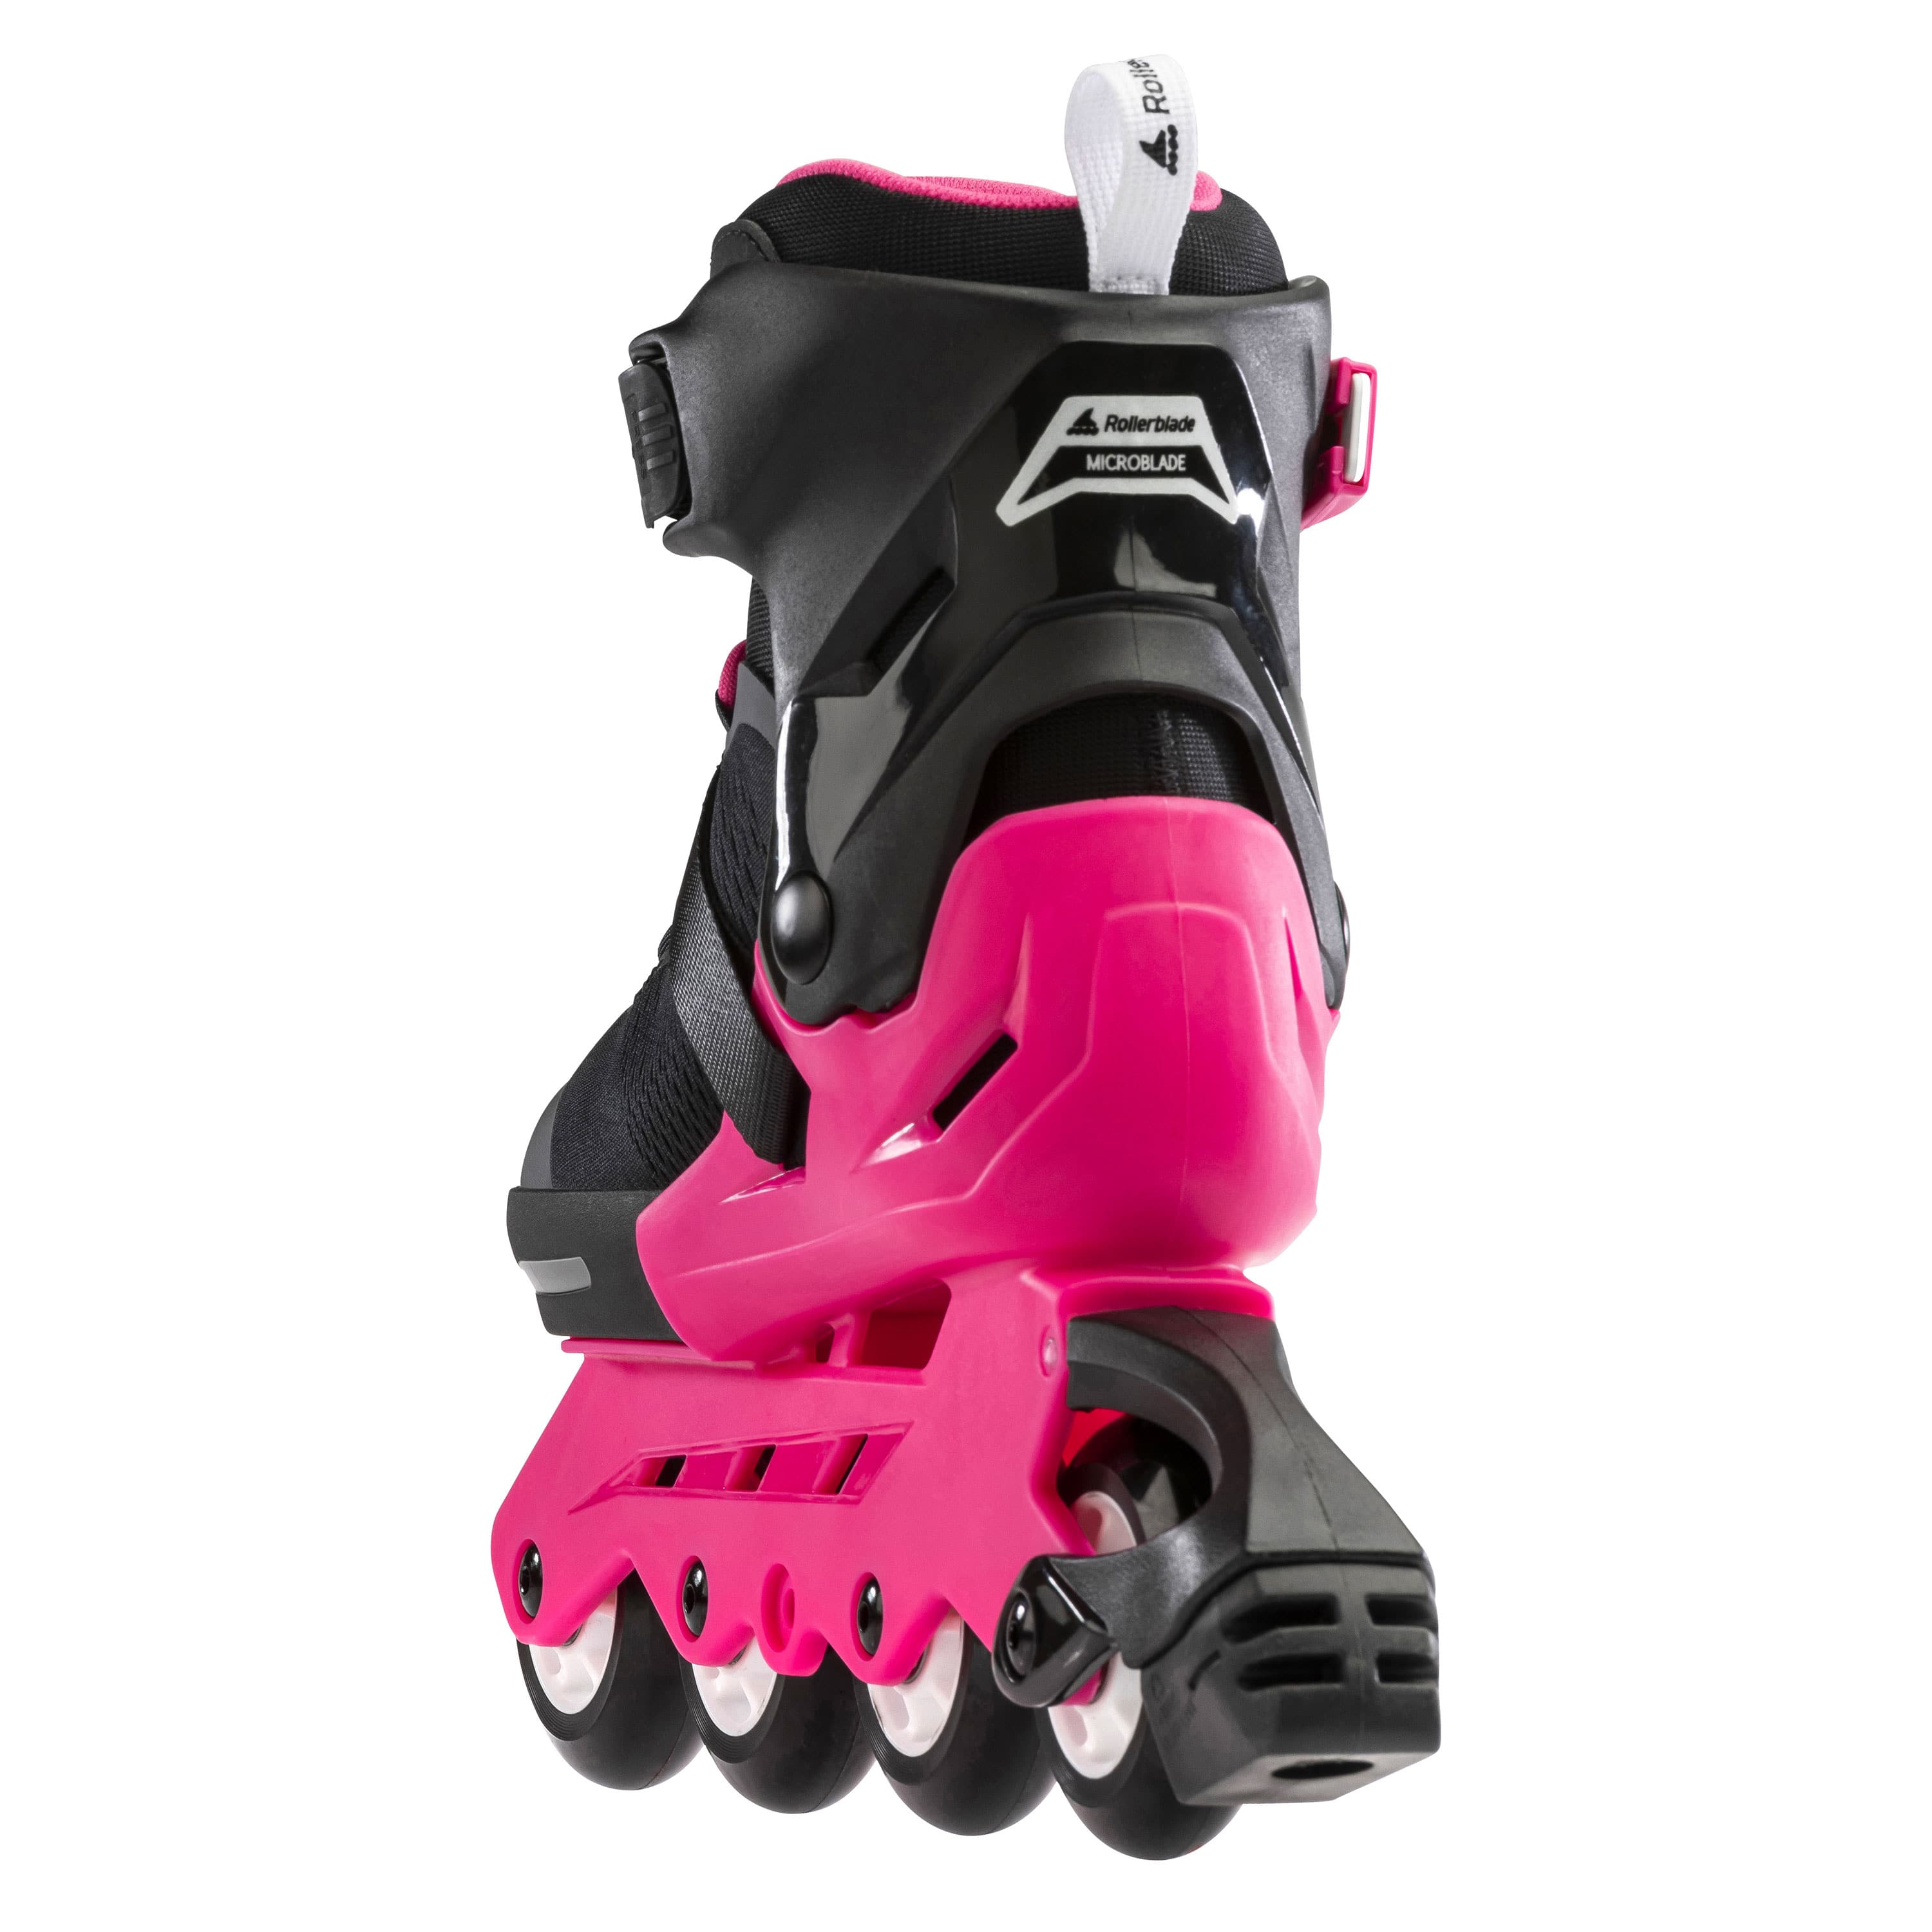 Ролики RollerBlade MicroBlade G Neon Pink 2021 (28-32) ціна 4900.00 грн - фотографія 2